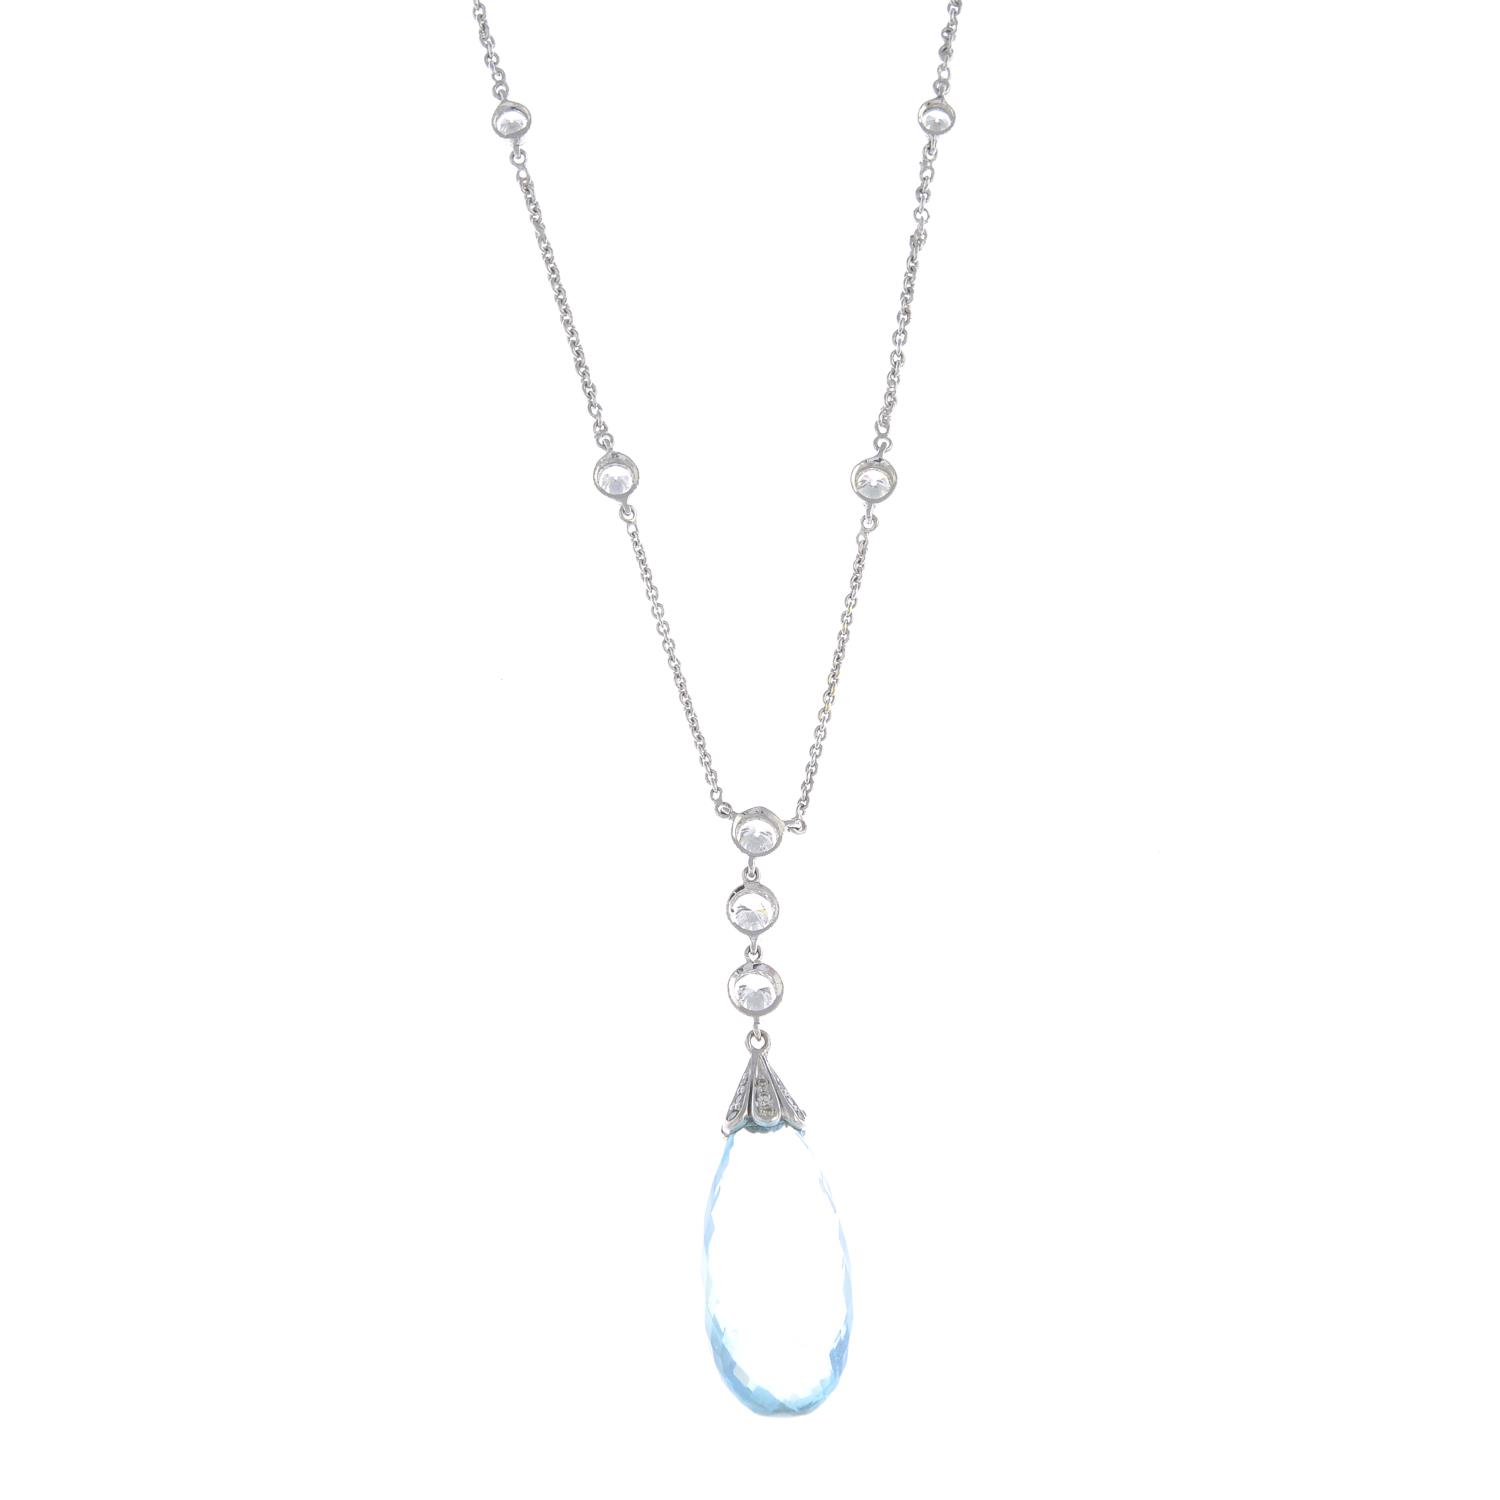 An aquamarine and diamond necklace. - Image 2 of 3